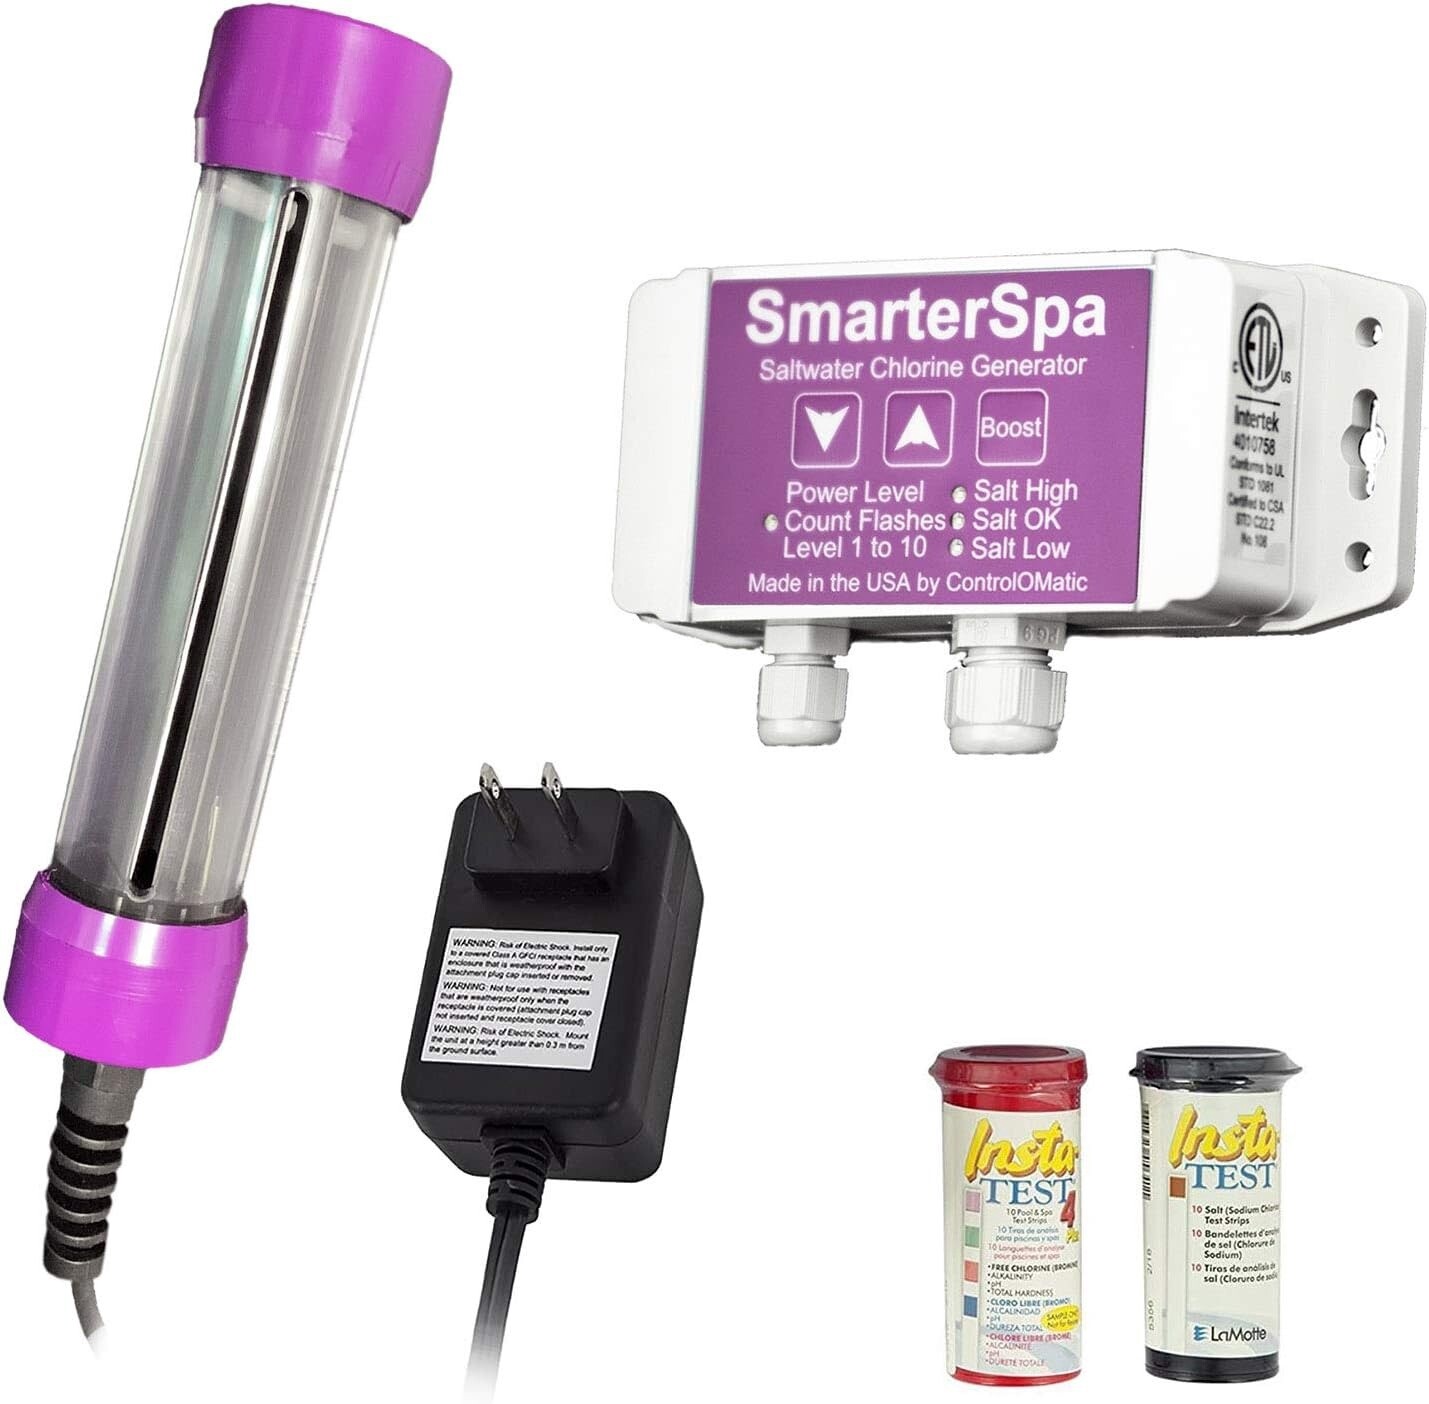 Smarter Spa chlorine generator